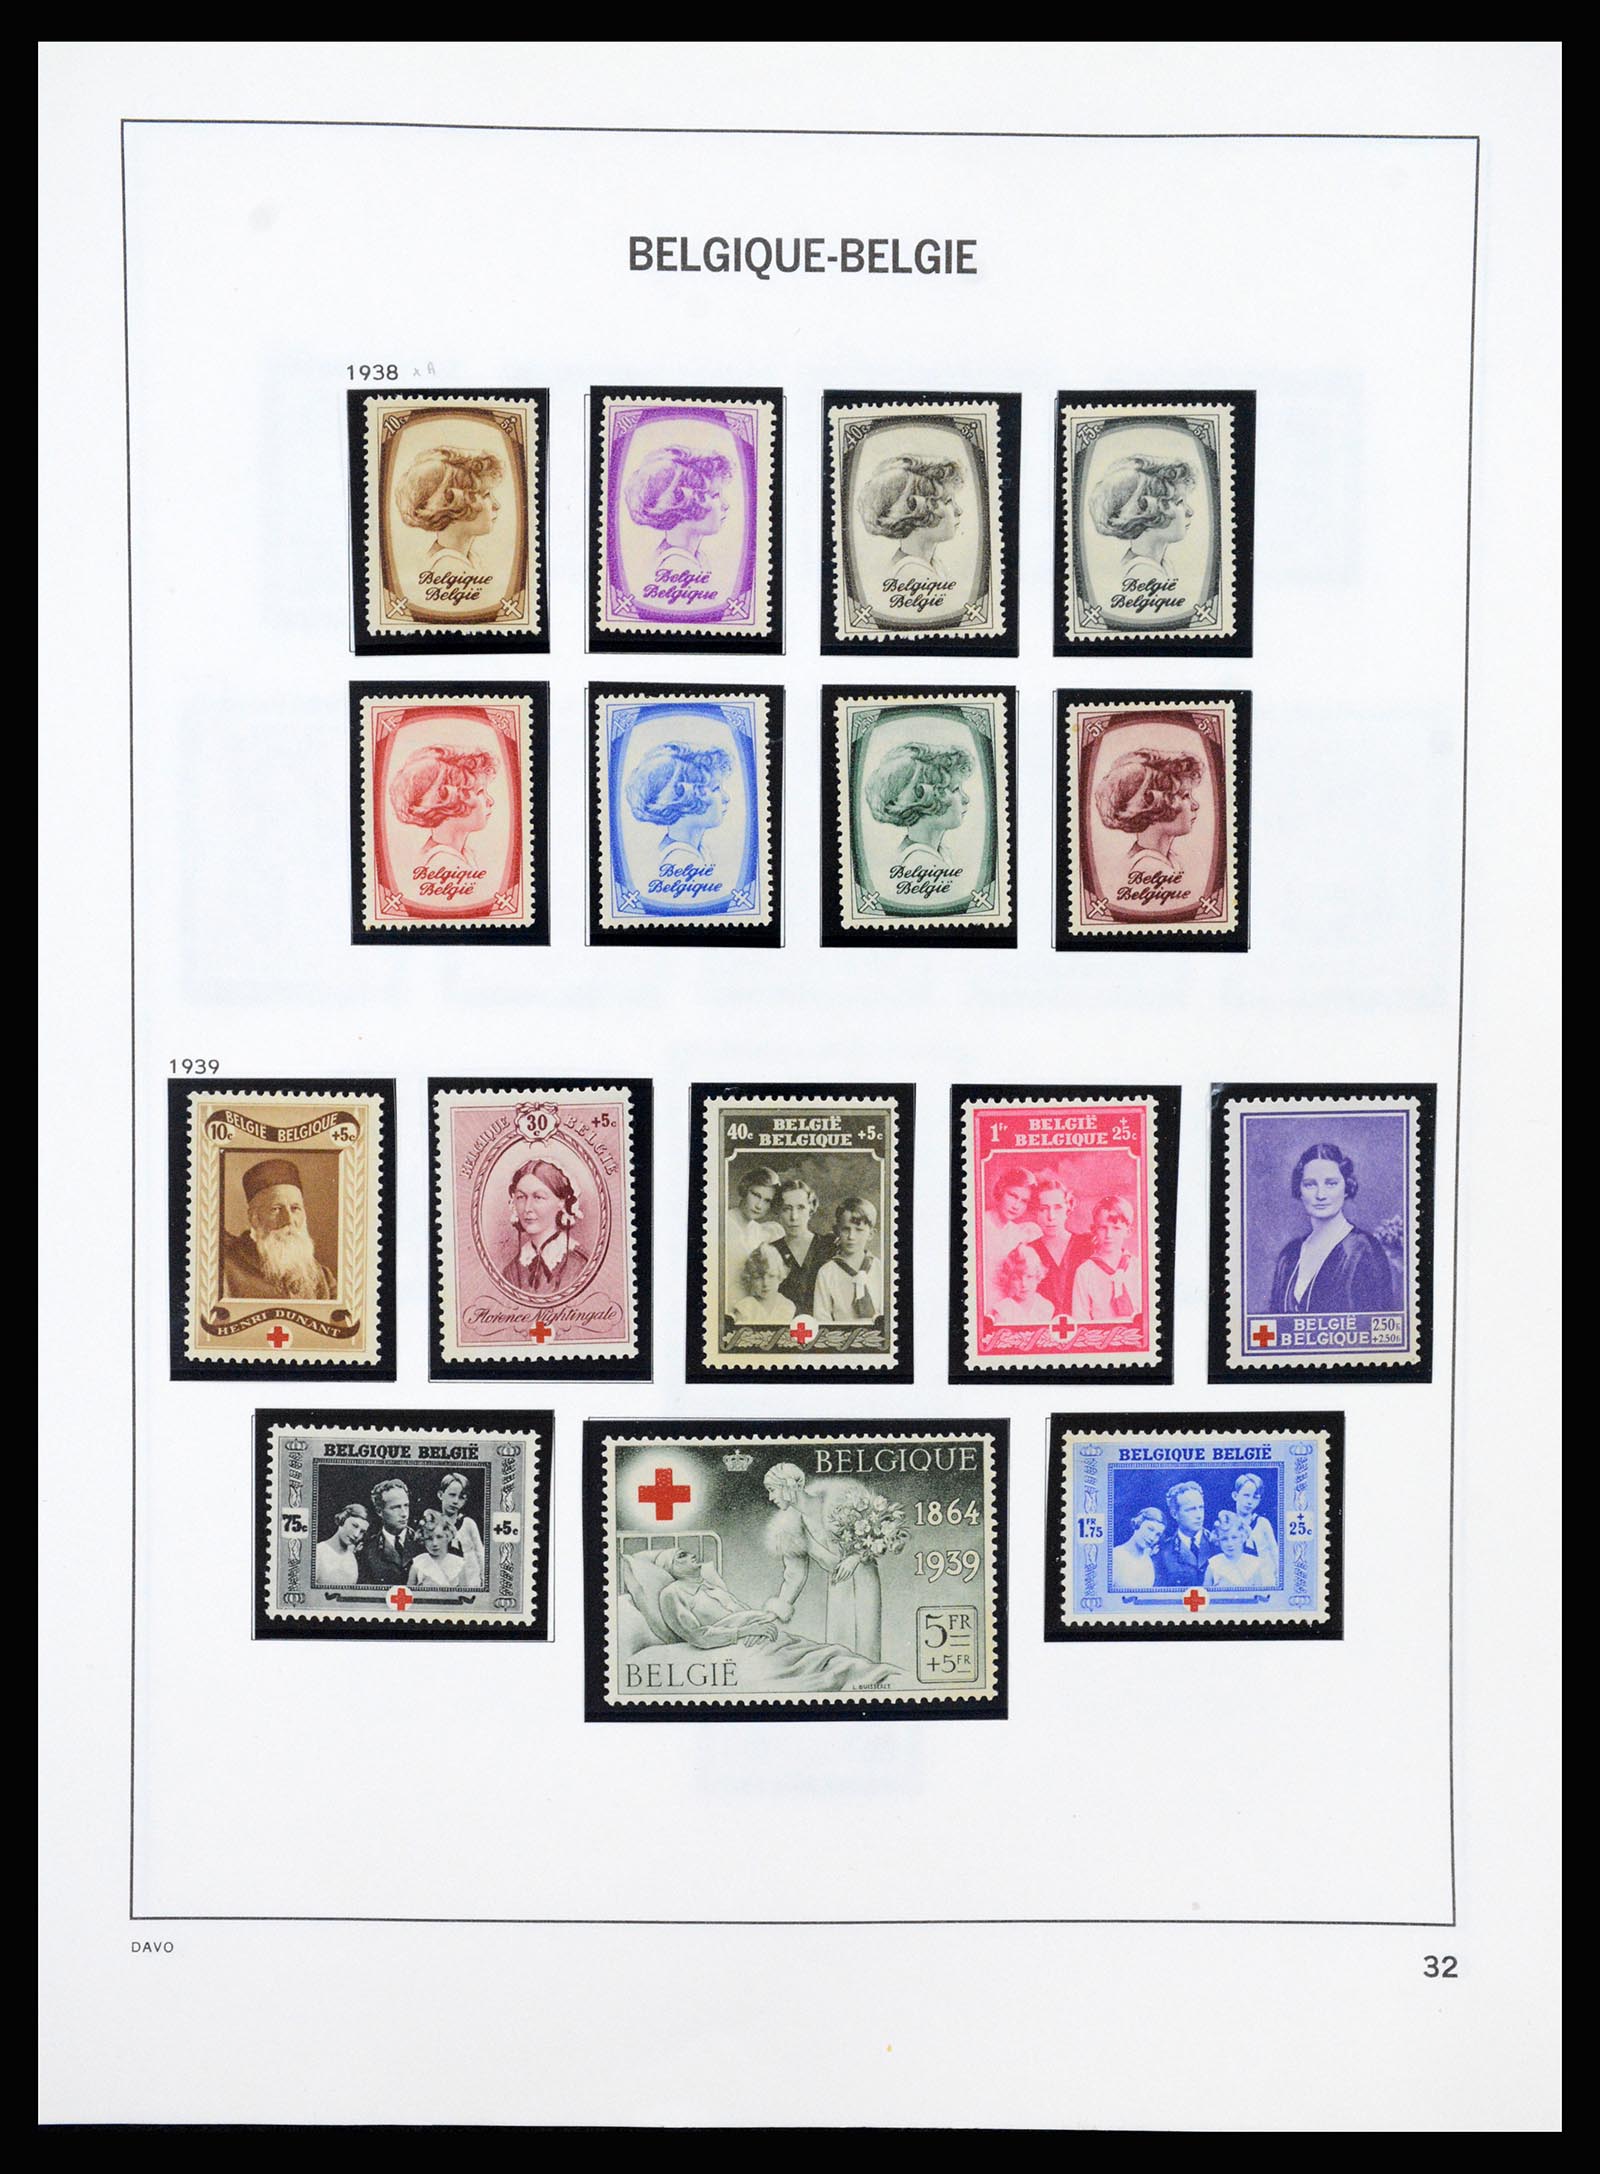 37189 032 - Stamp collection 37189 Belgium 1849-2006.